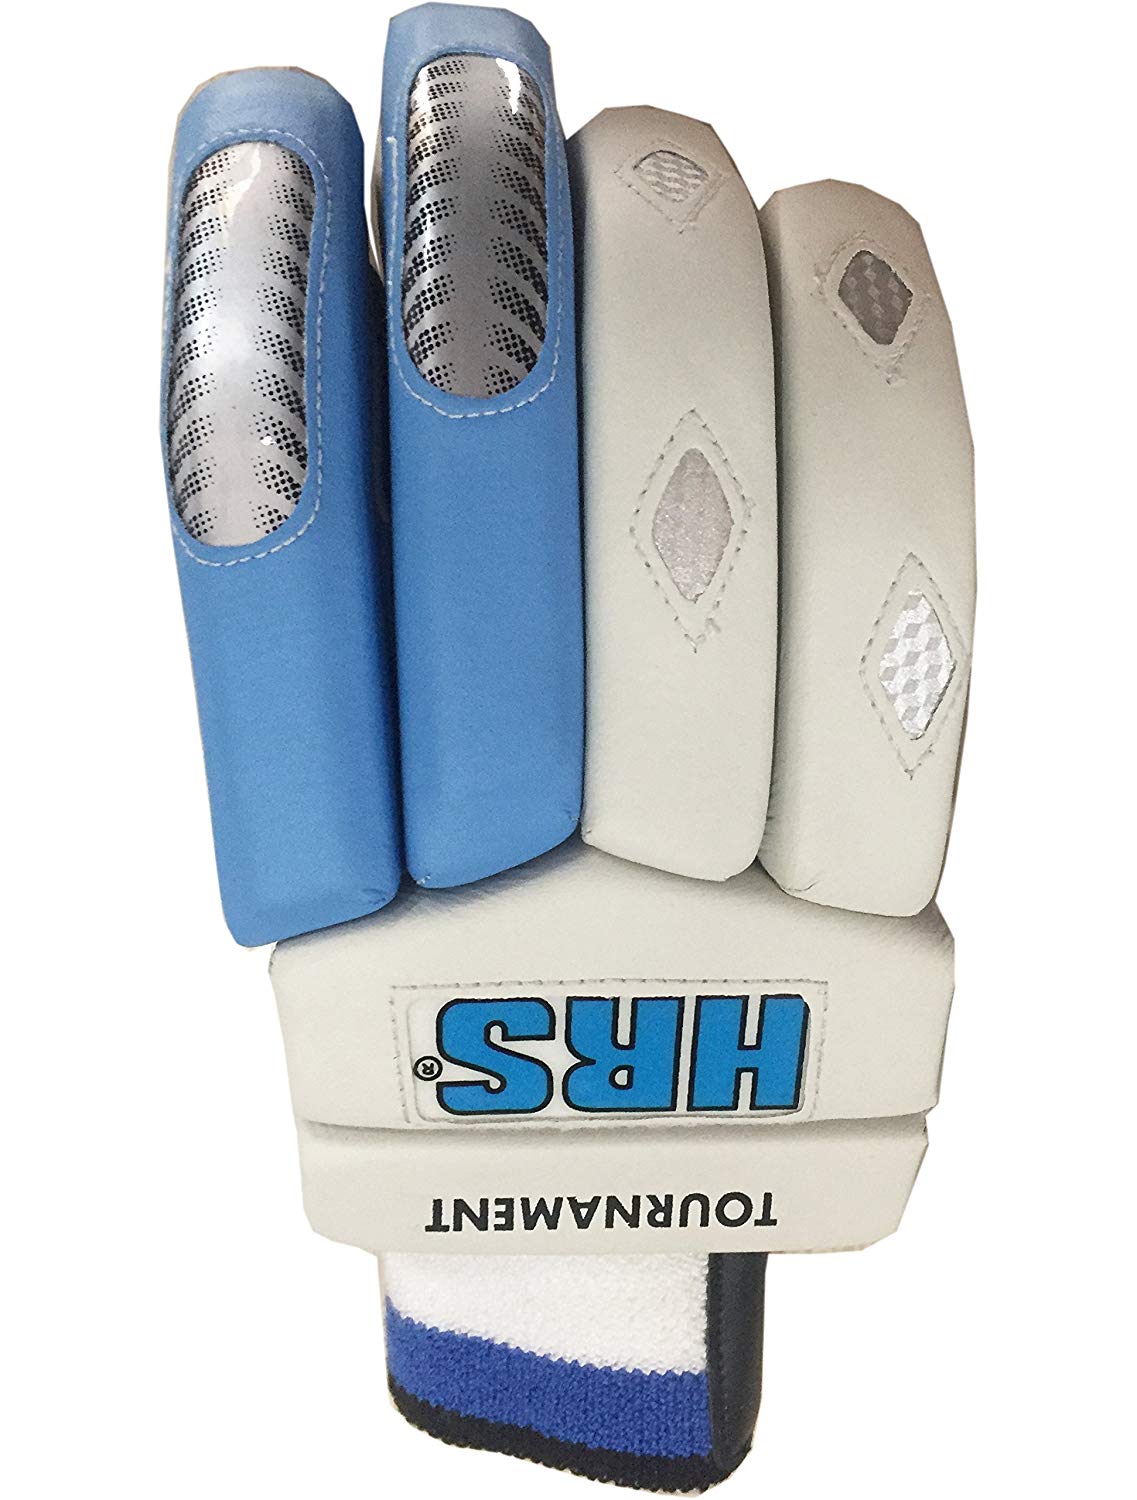 HRS Tournament Right Hand Batting Gloves (White/Blue) - Best Price online Prokicksports.com